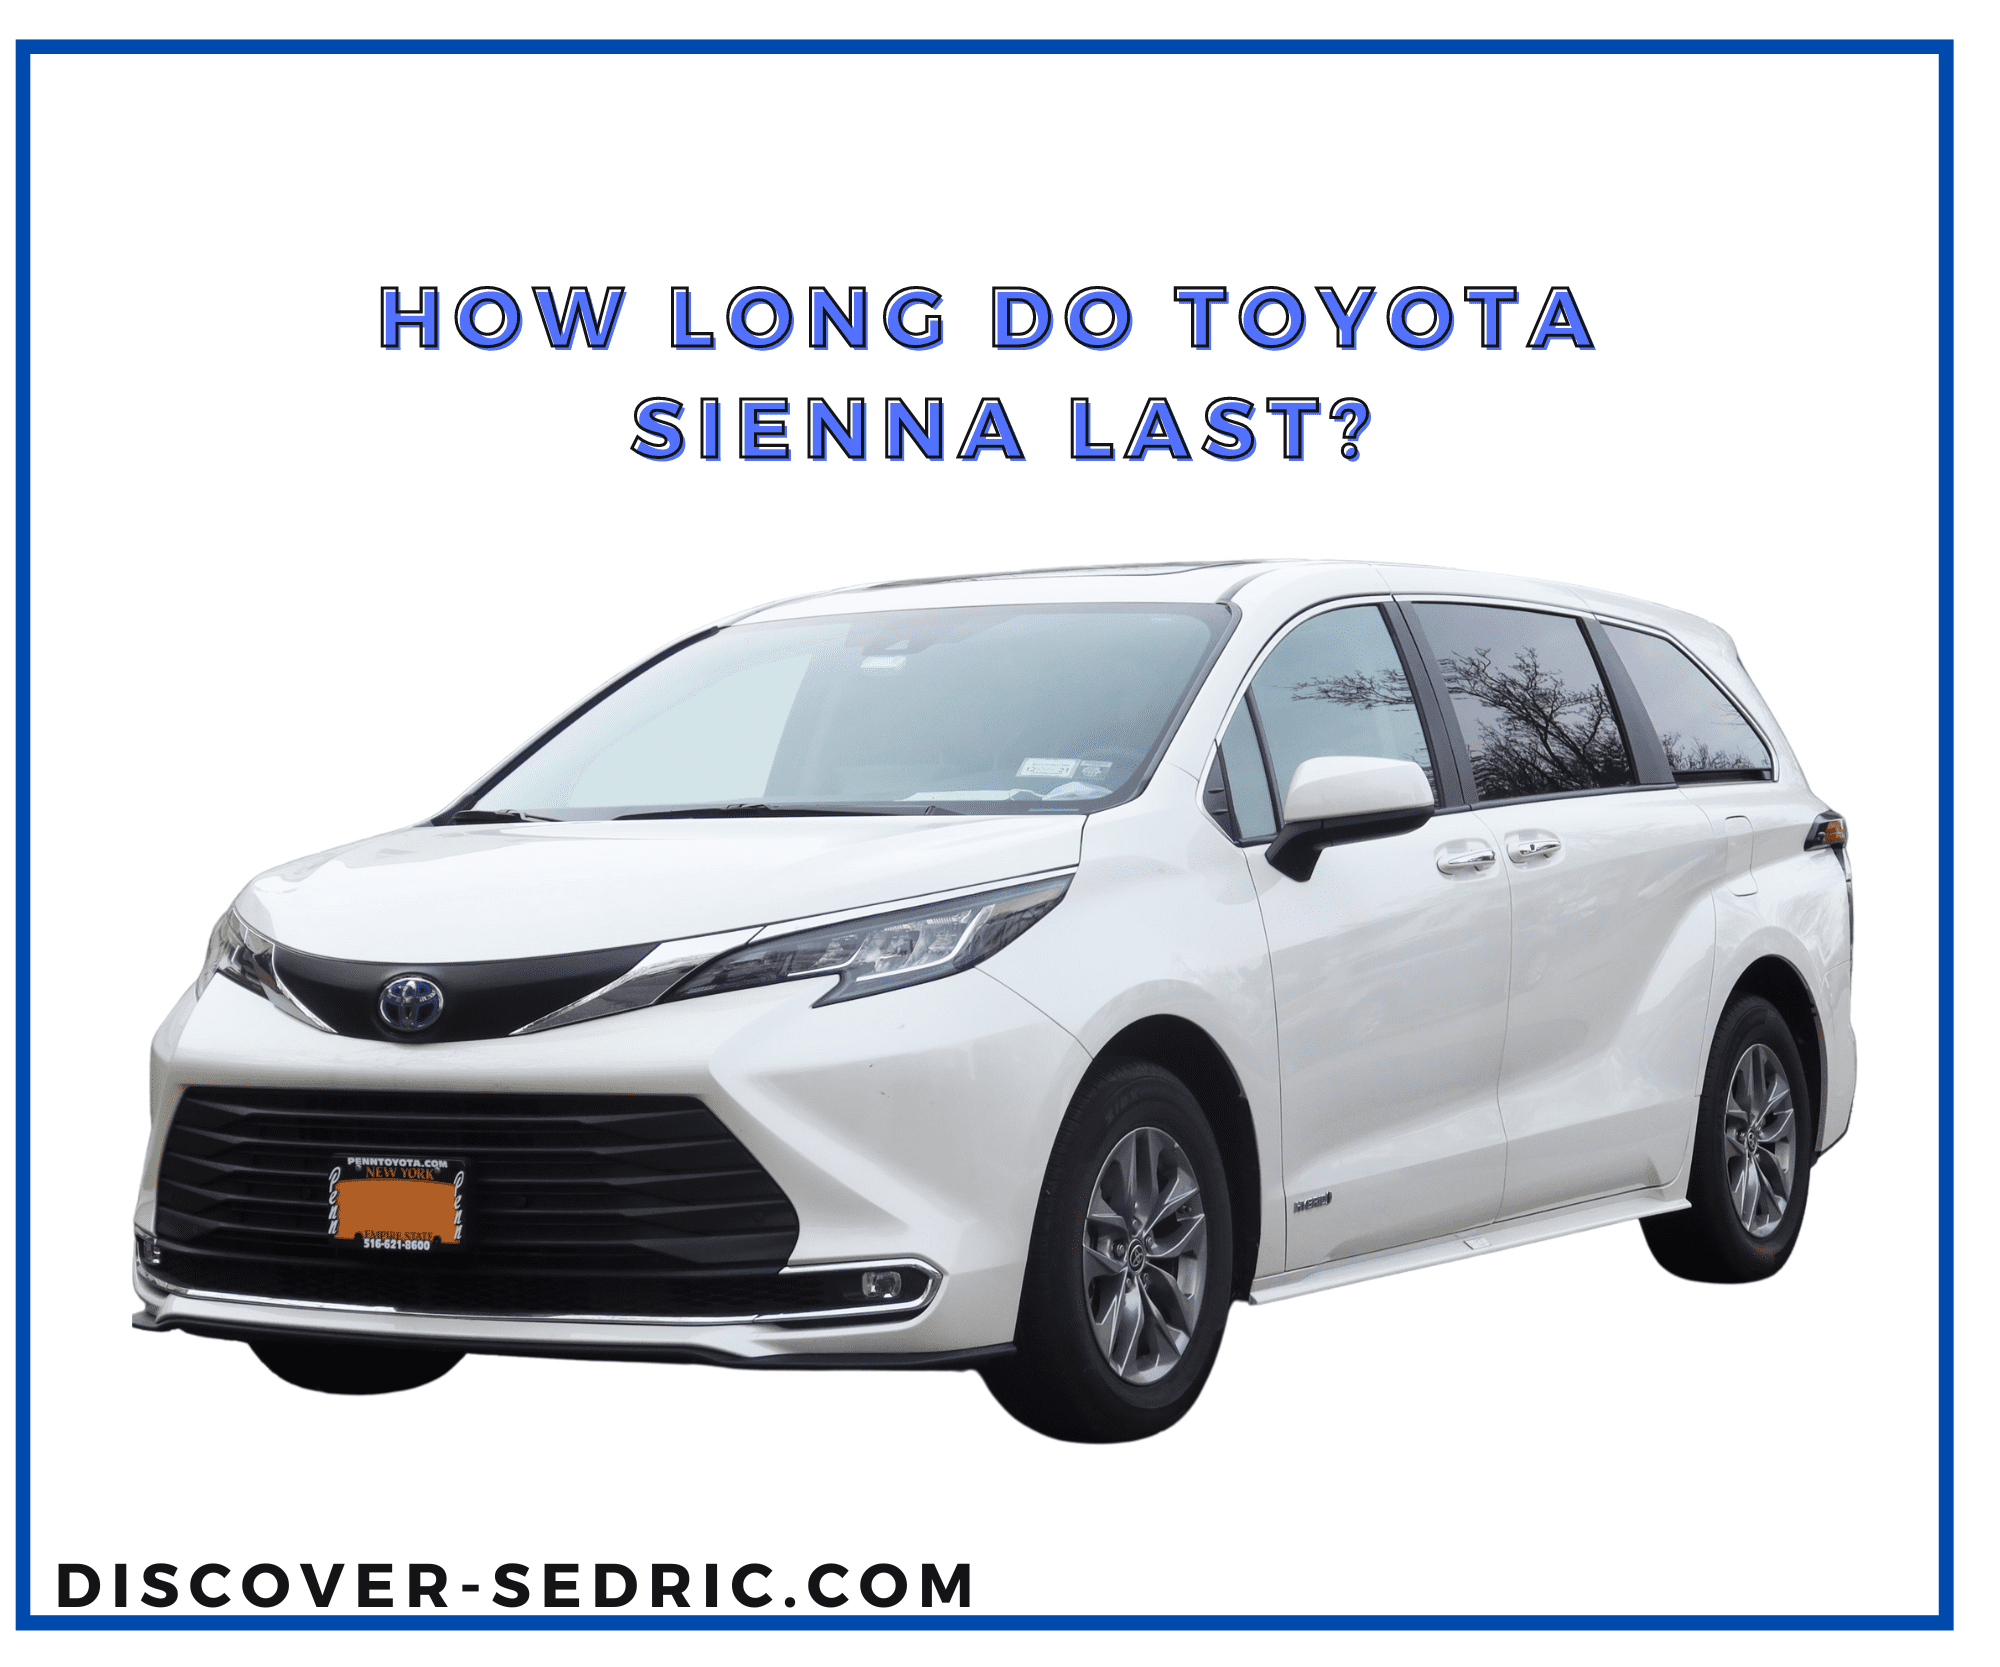 Toyota sienna last